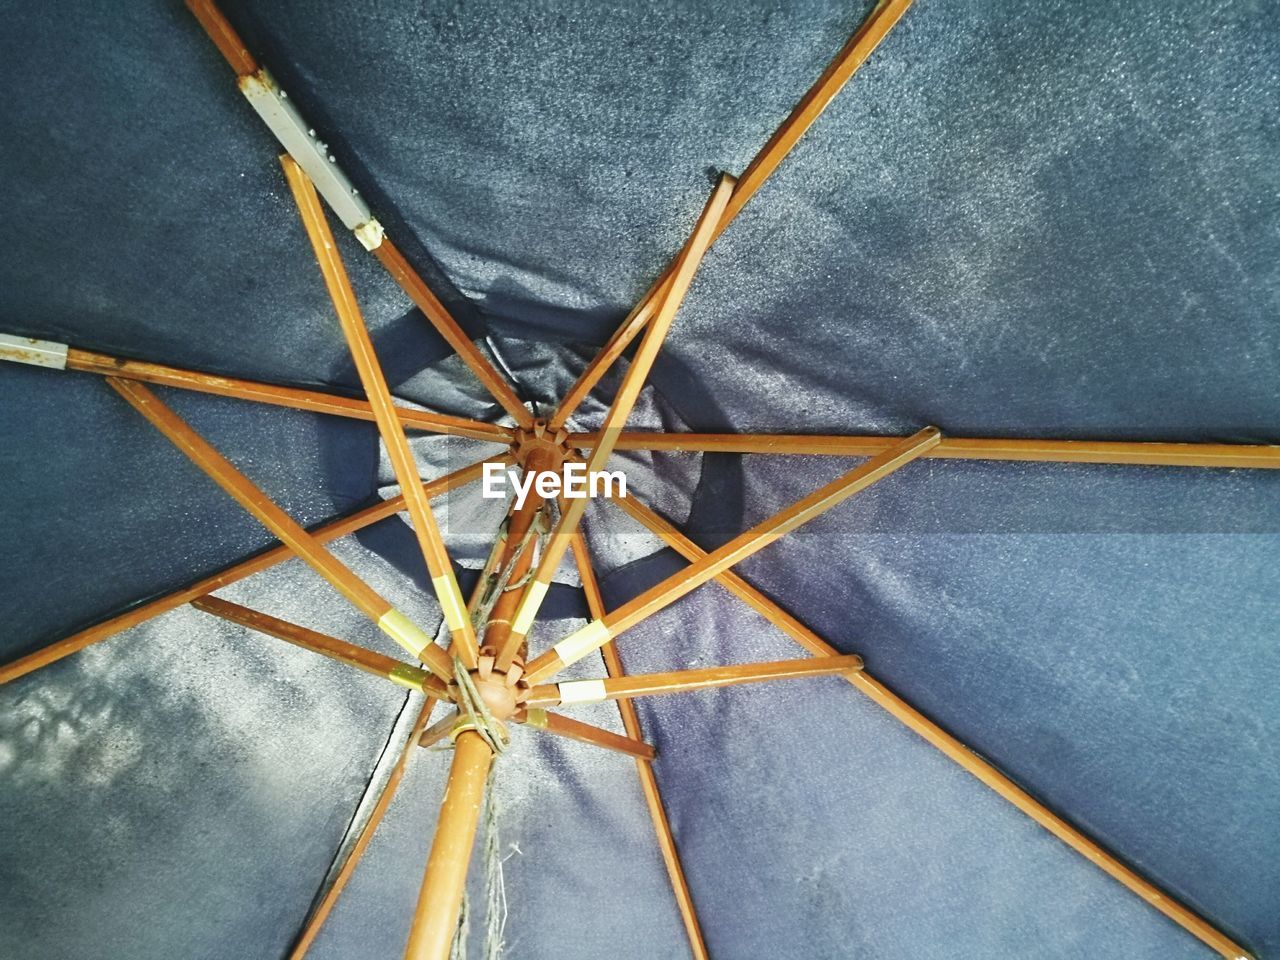 Under my market umbrella whangarei in newzealand fresh on on eyeem